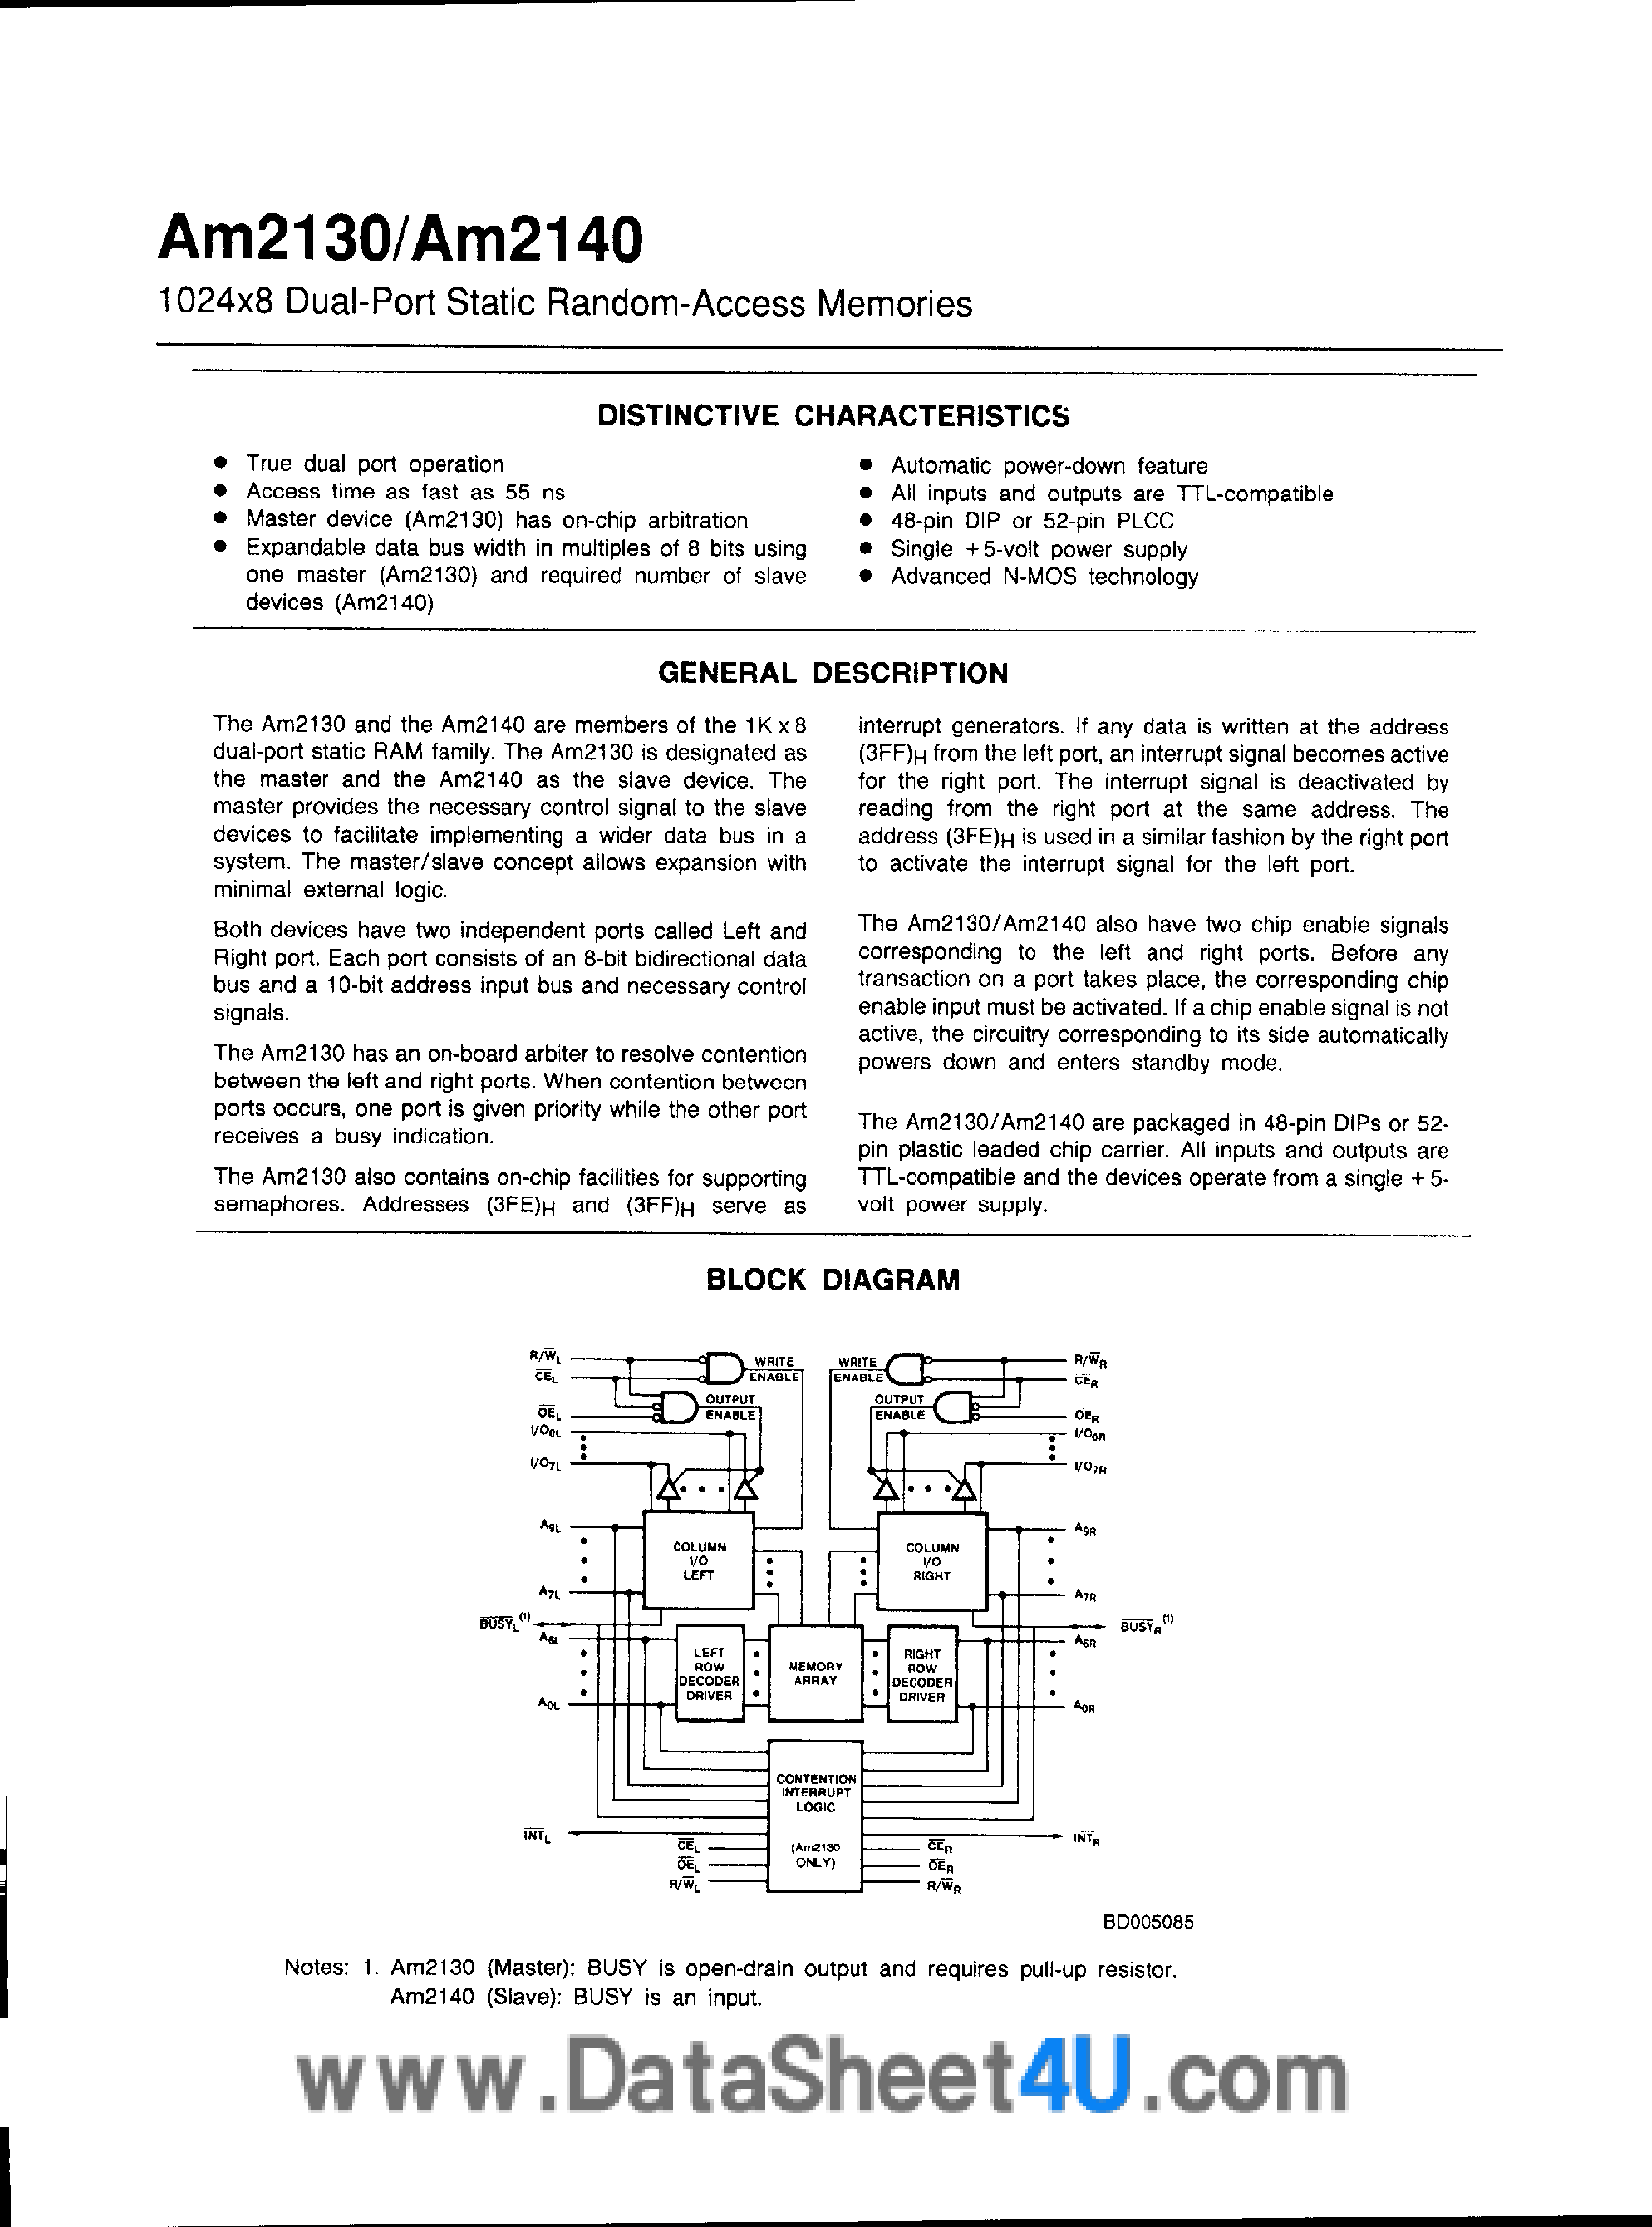 Datasheet AM2130 - (AM2130 / AM2140) 1024 x 8 Dual Port SRAM page 1